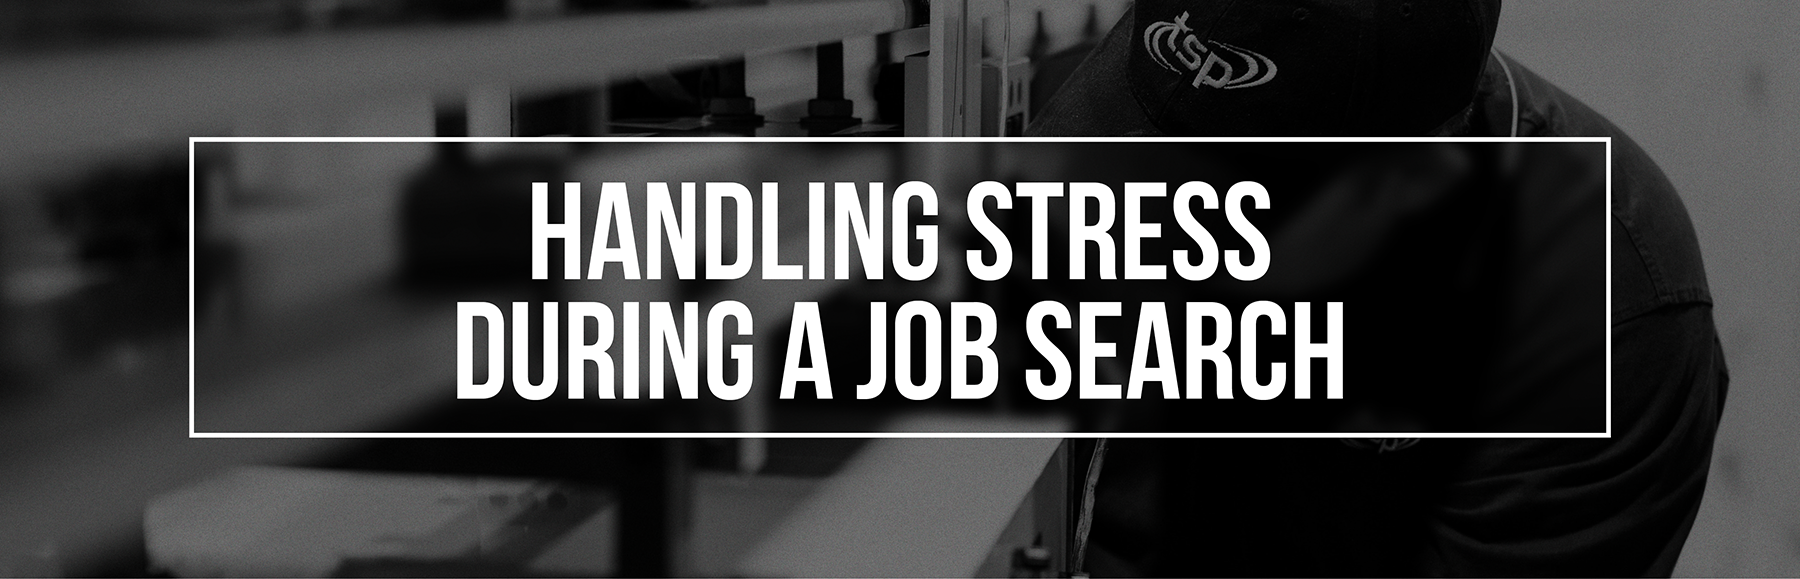 handling-stress-job-search